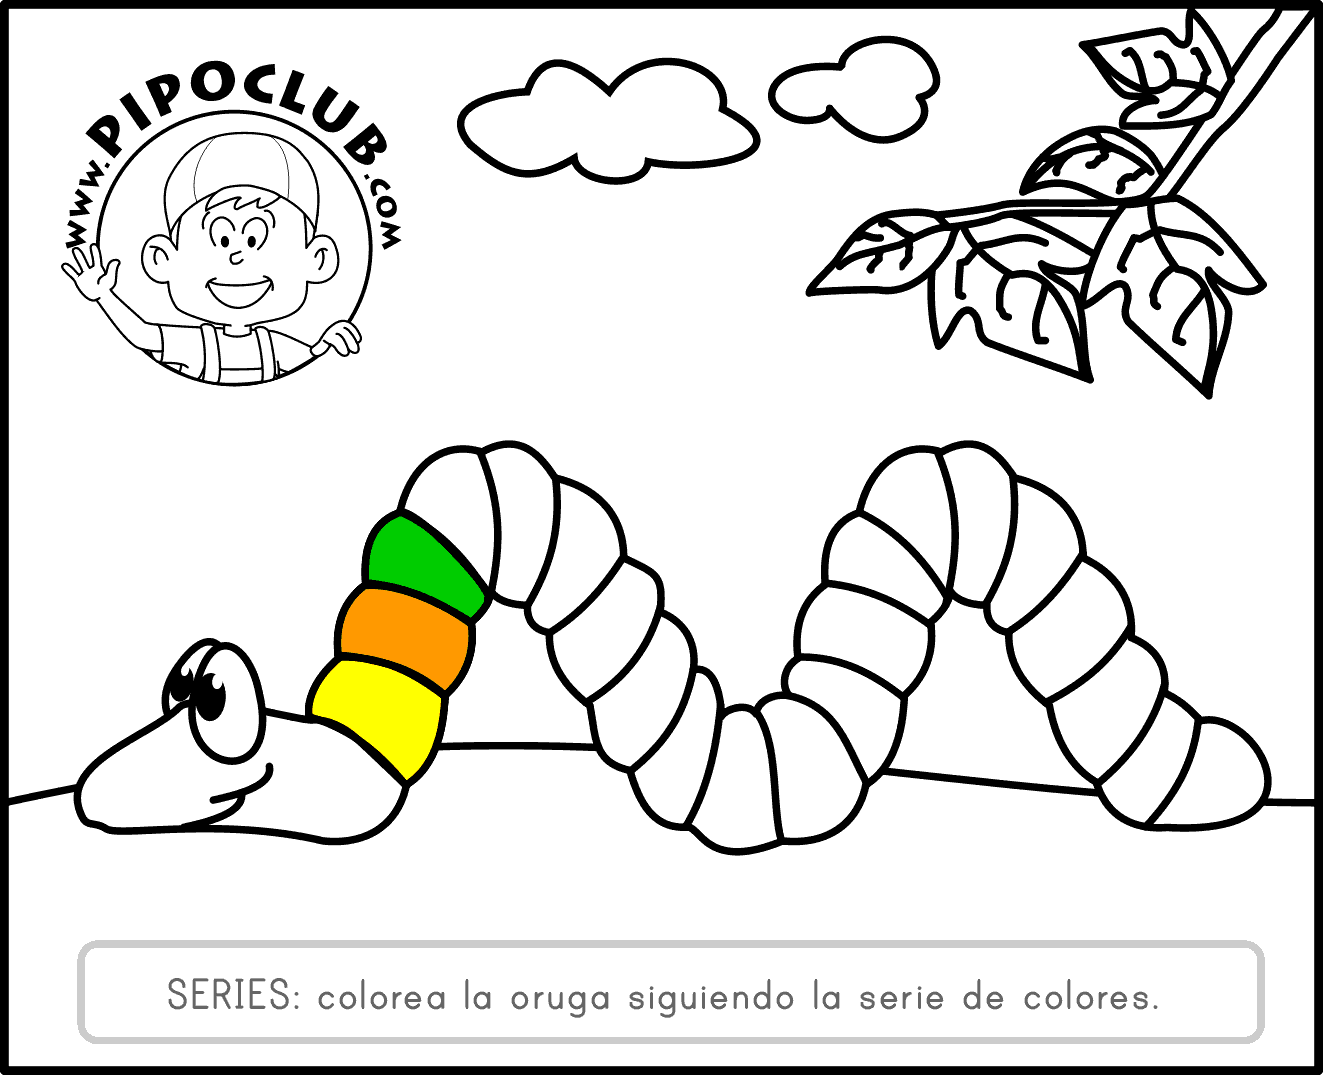 http://www.pipoclub.com/dibujos-para-colorear/img/series-01.png